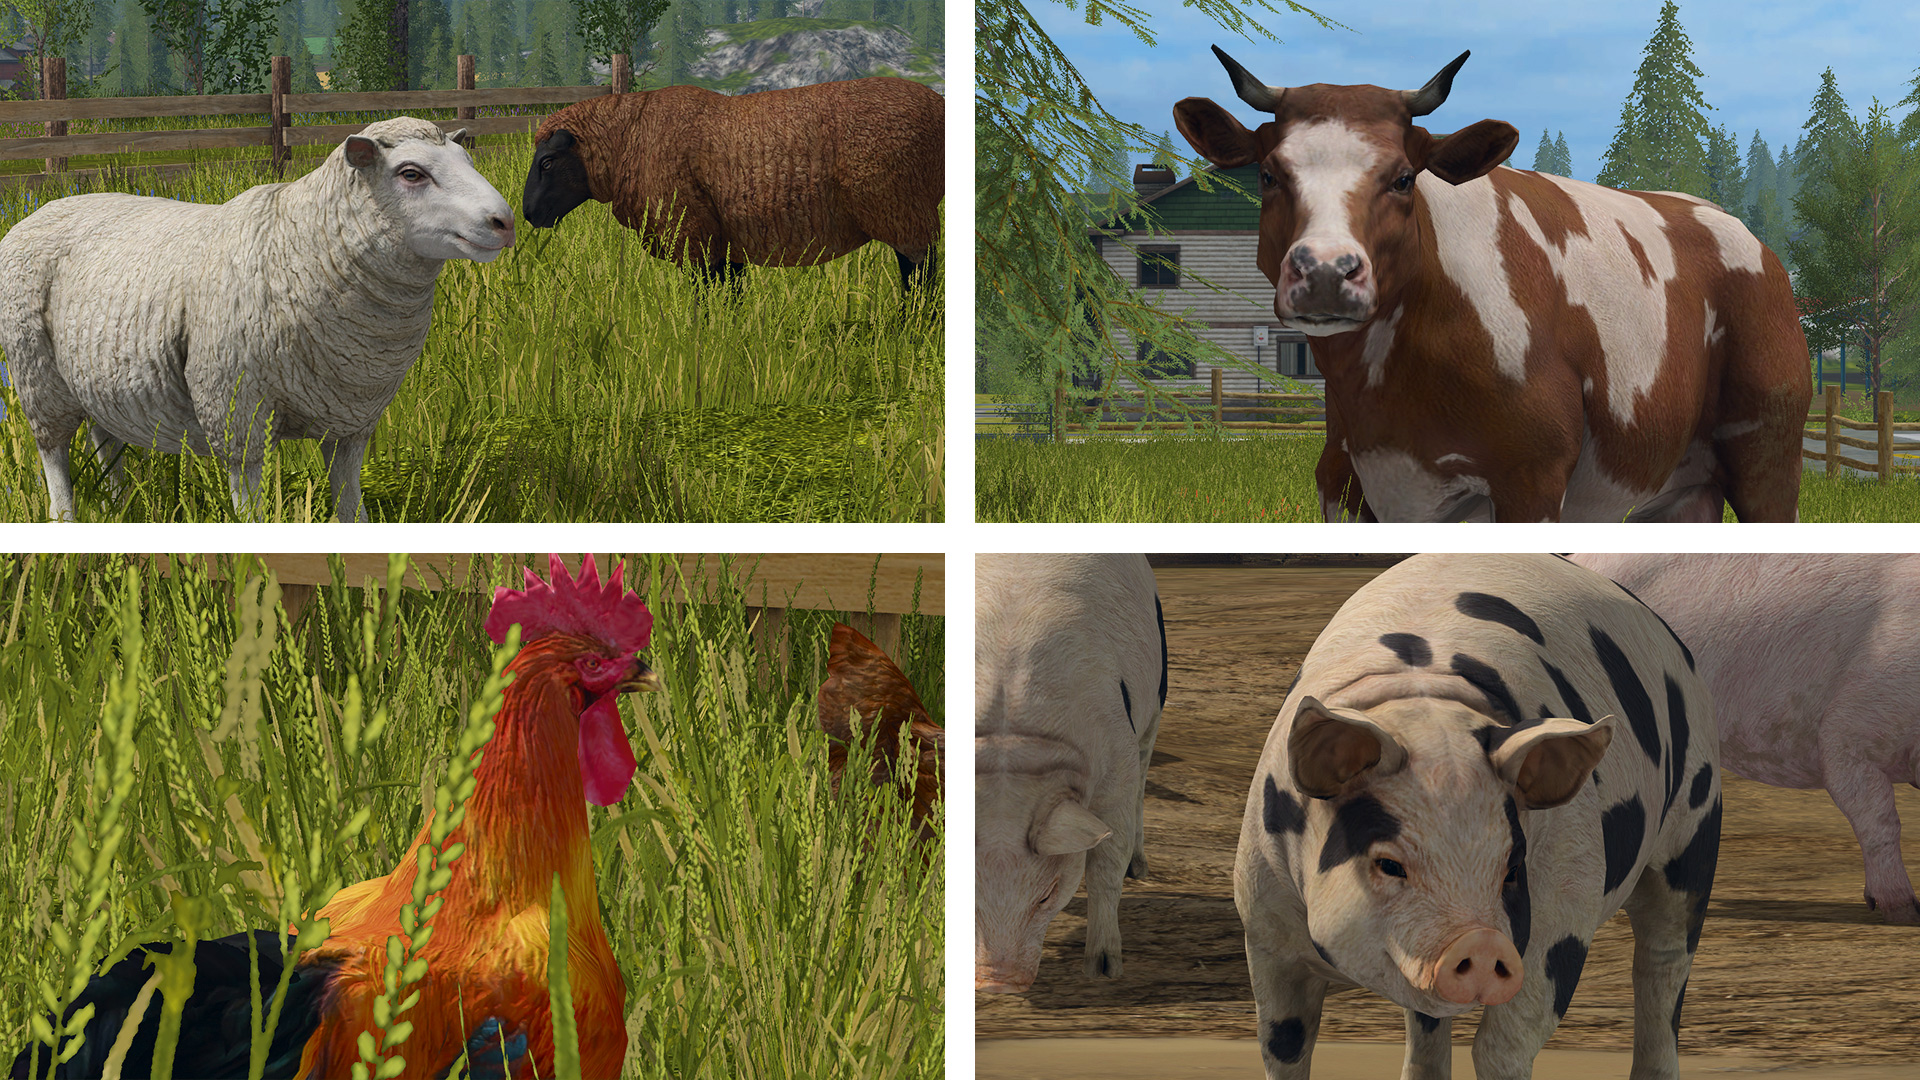 模拟农场 Farming Simulator 2022 1.5 Mac 破解版 - 农耕模拟游戏